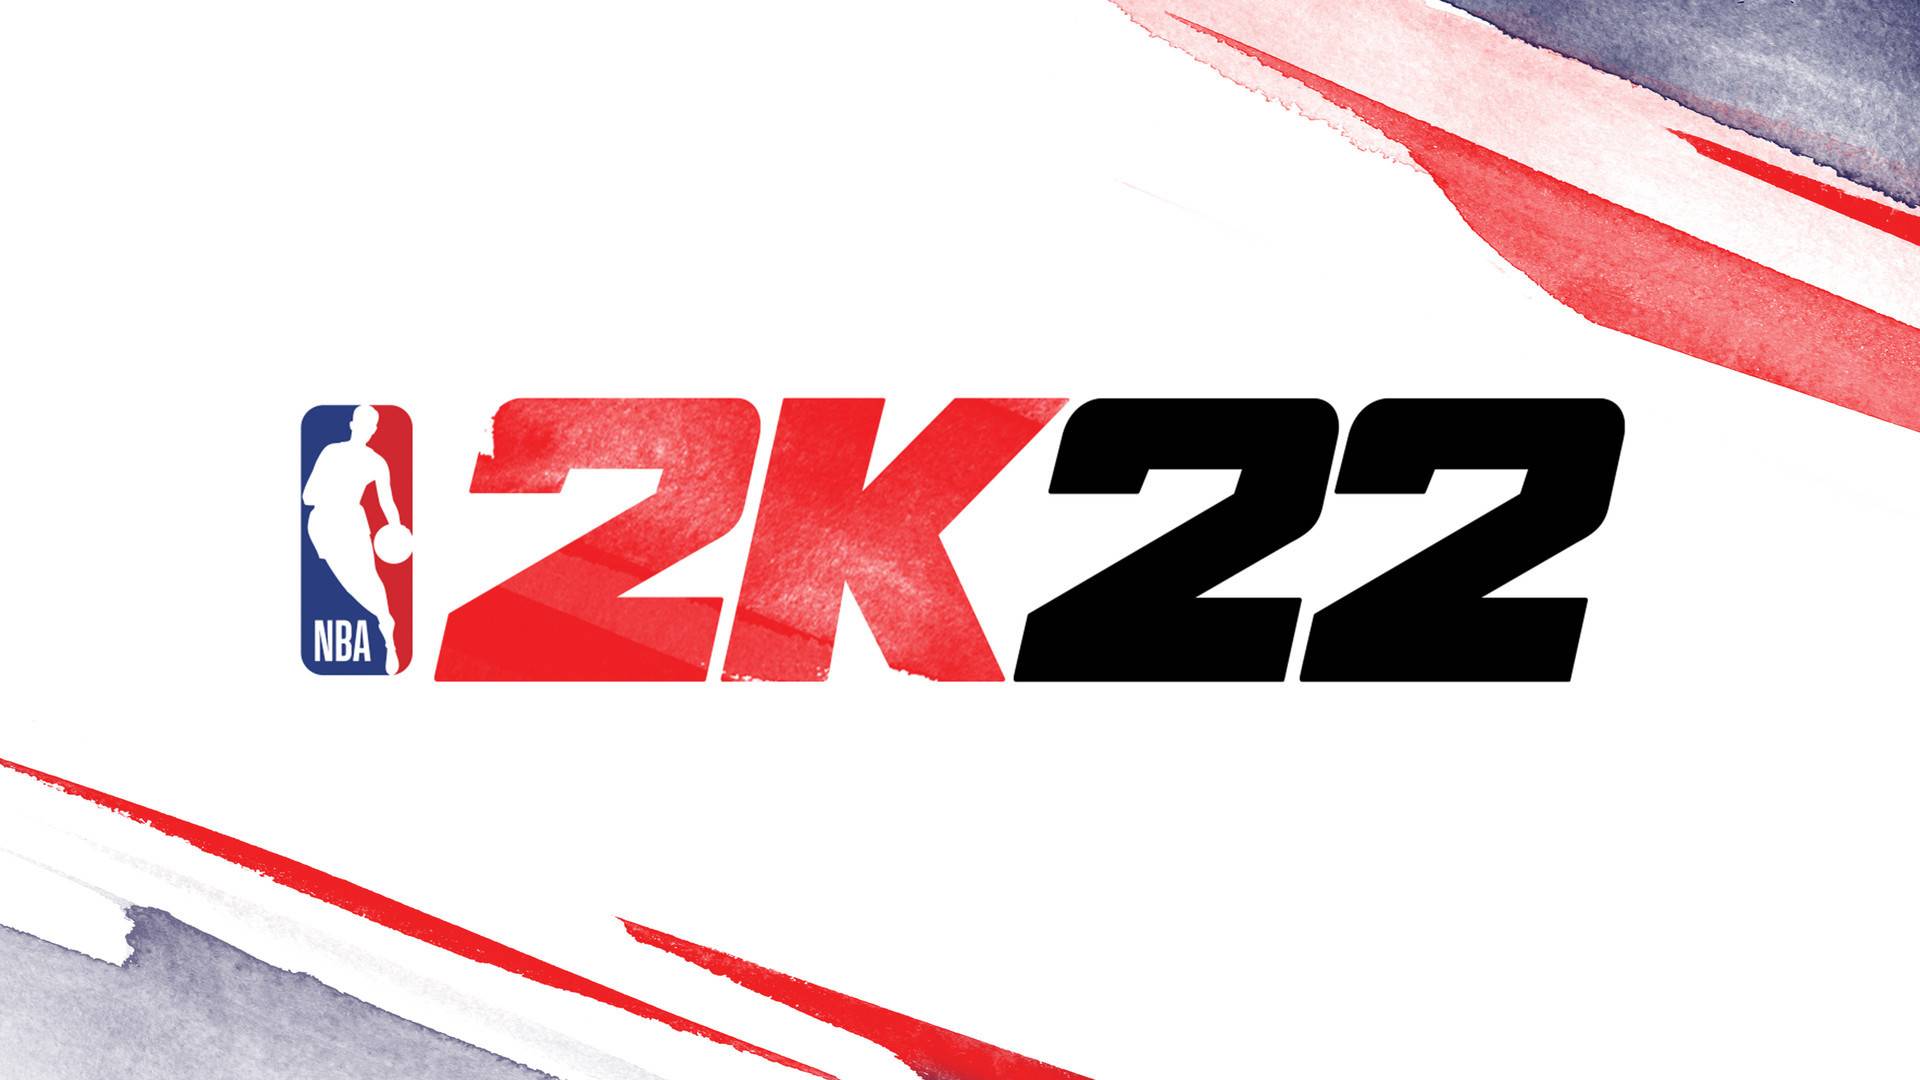 NBA 2K22 (PC) Steam Key - JAMA LEVOVA